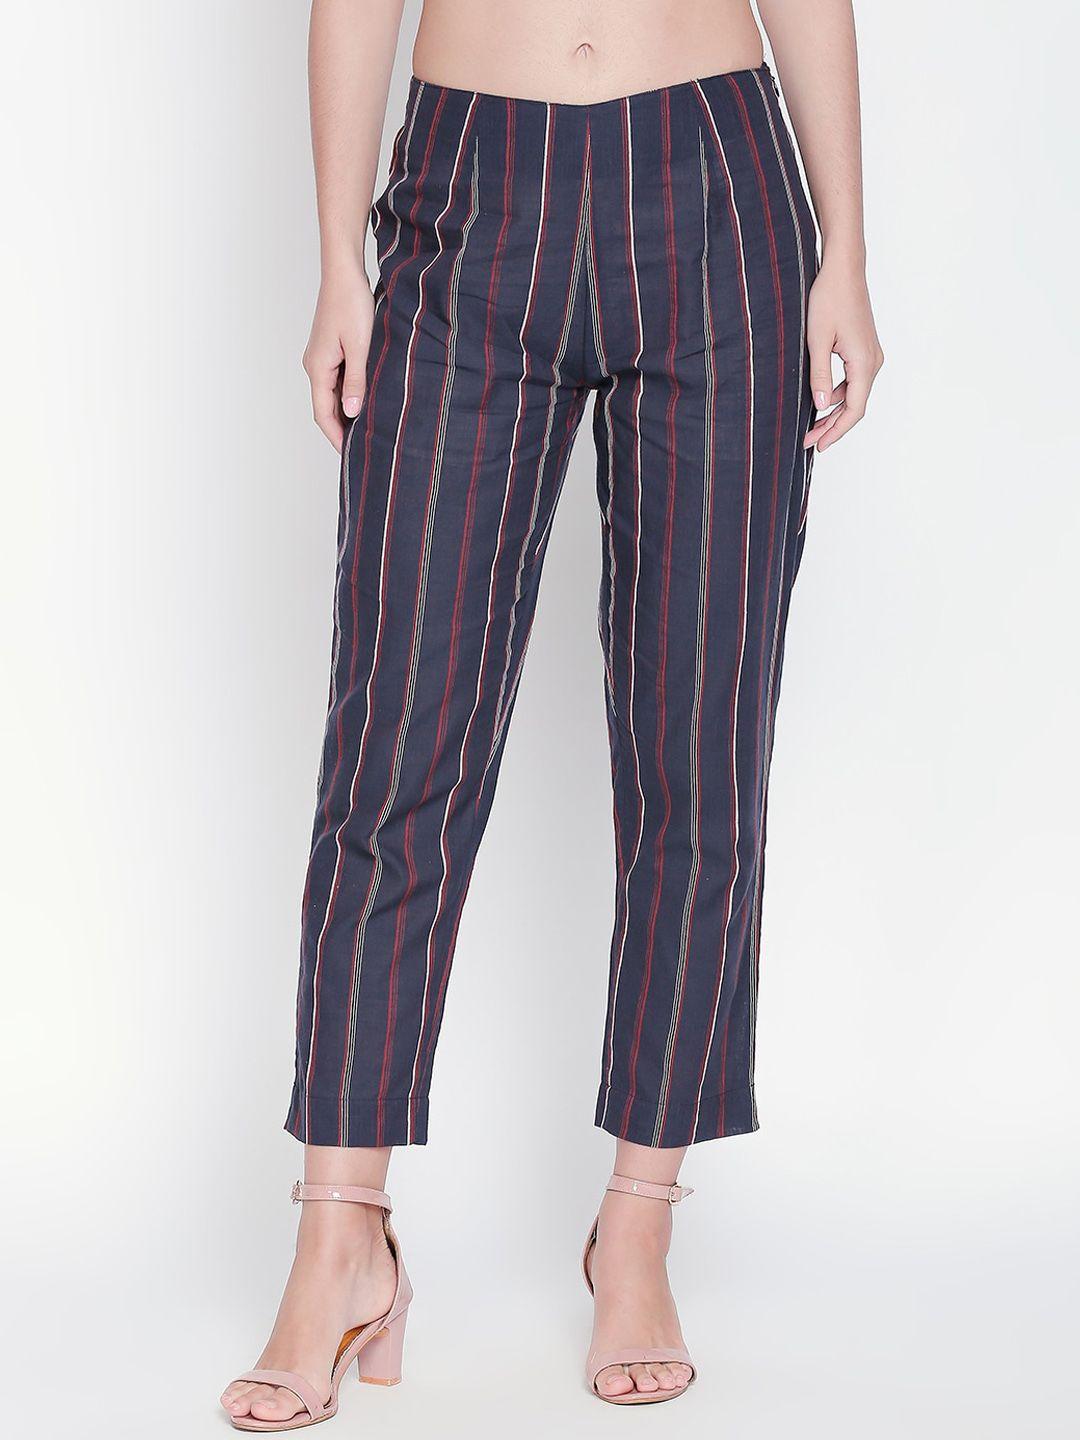 rangmanch by pantaloons women violet slim fit striped regular trousers